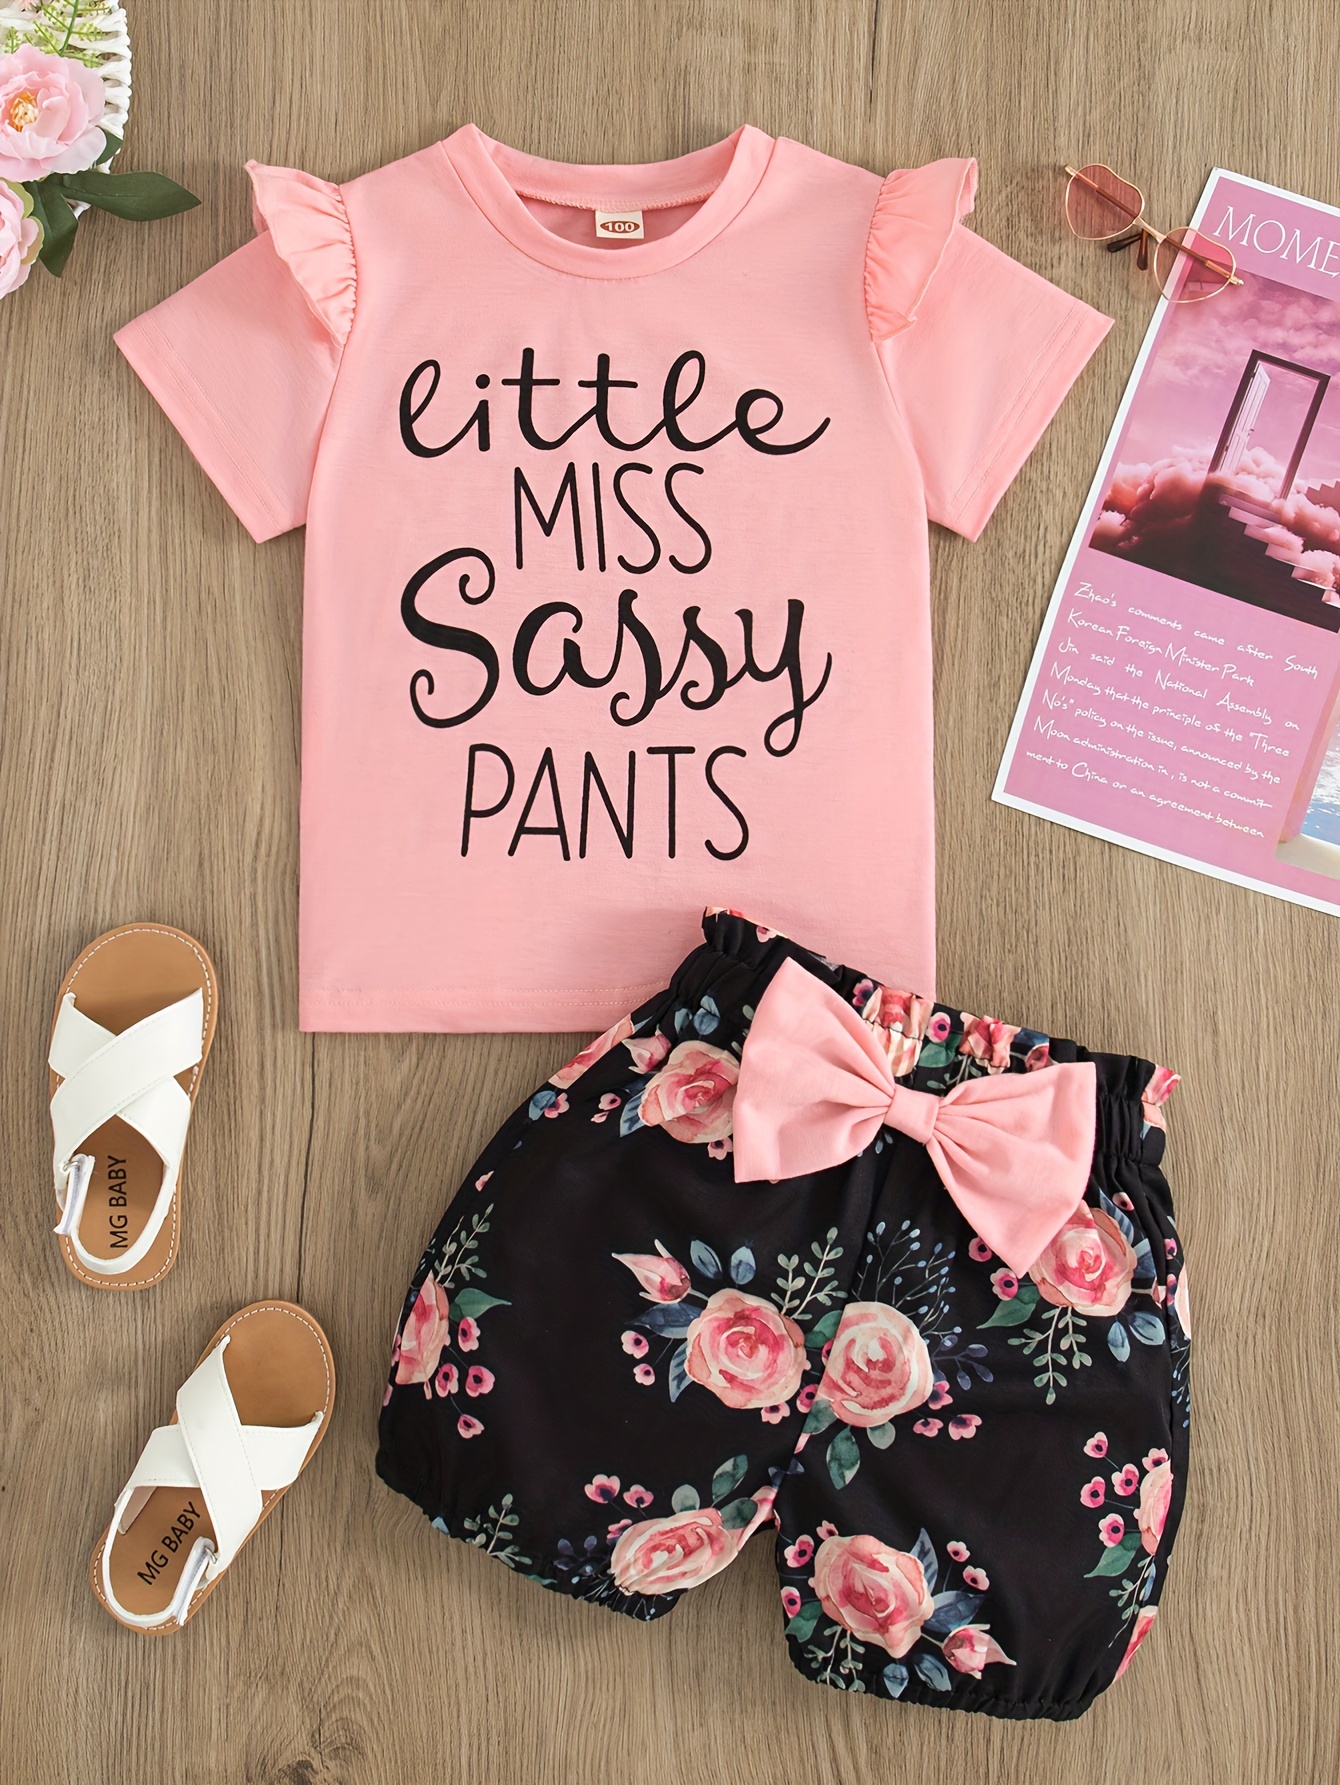  Girls Top Kids Short Sleeves Baby Pink Sassy Print